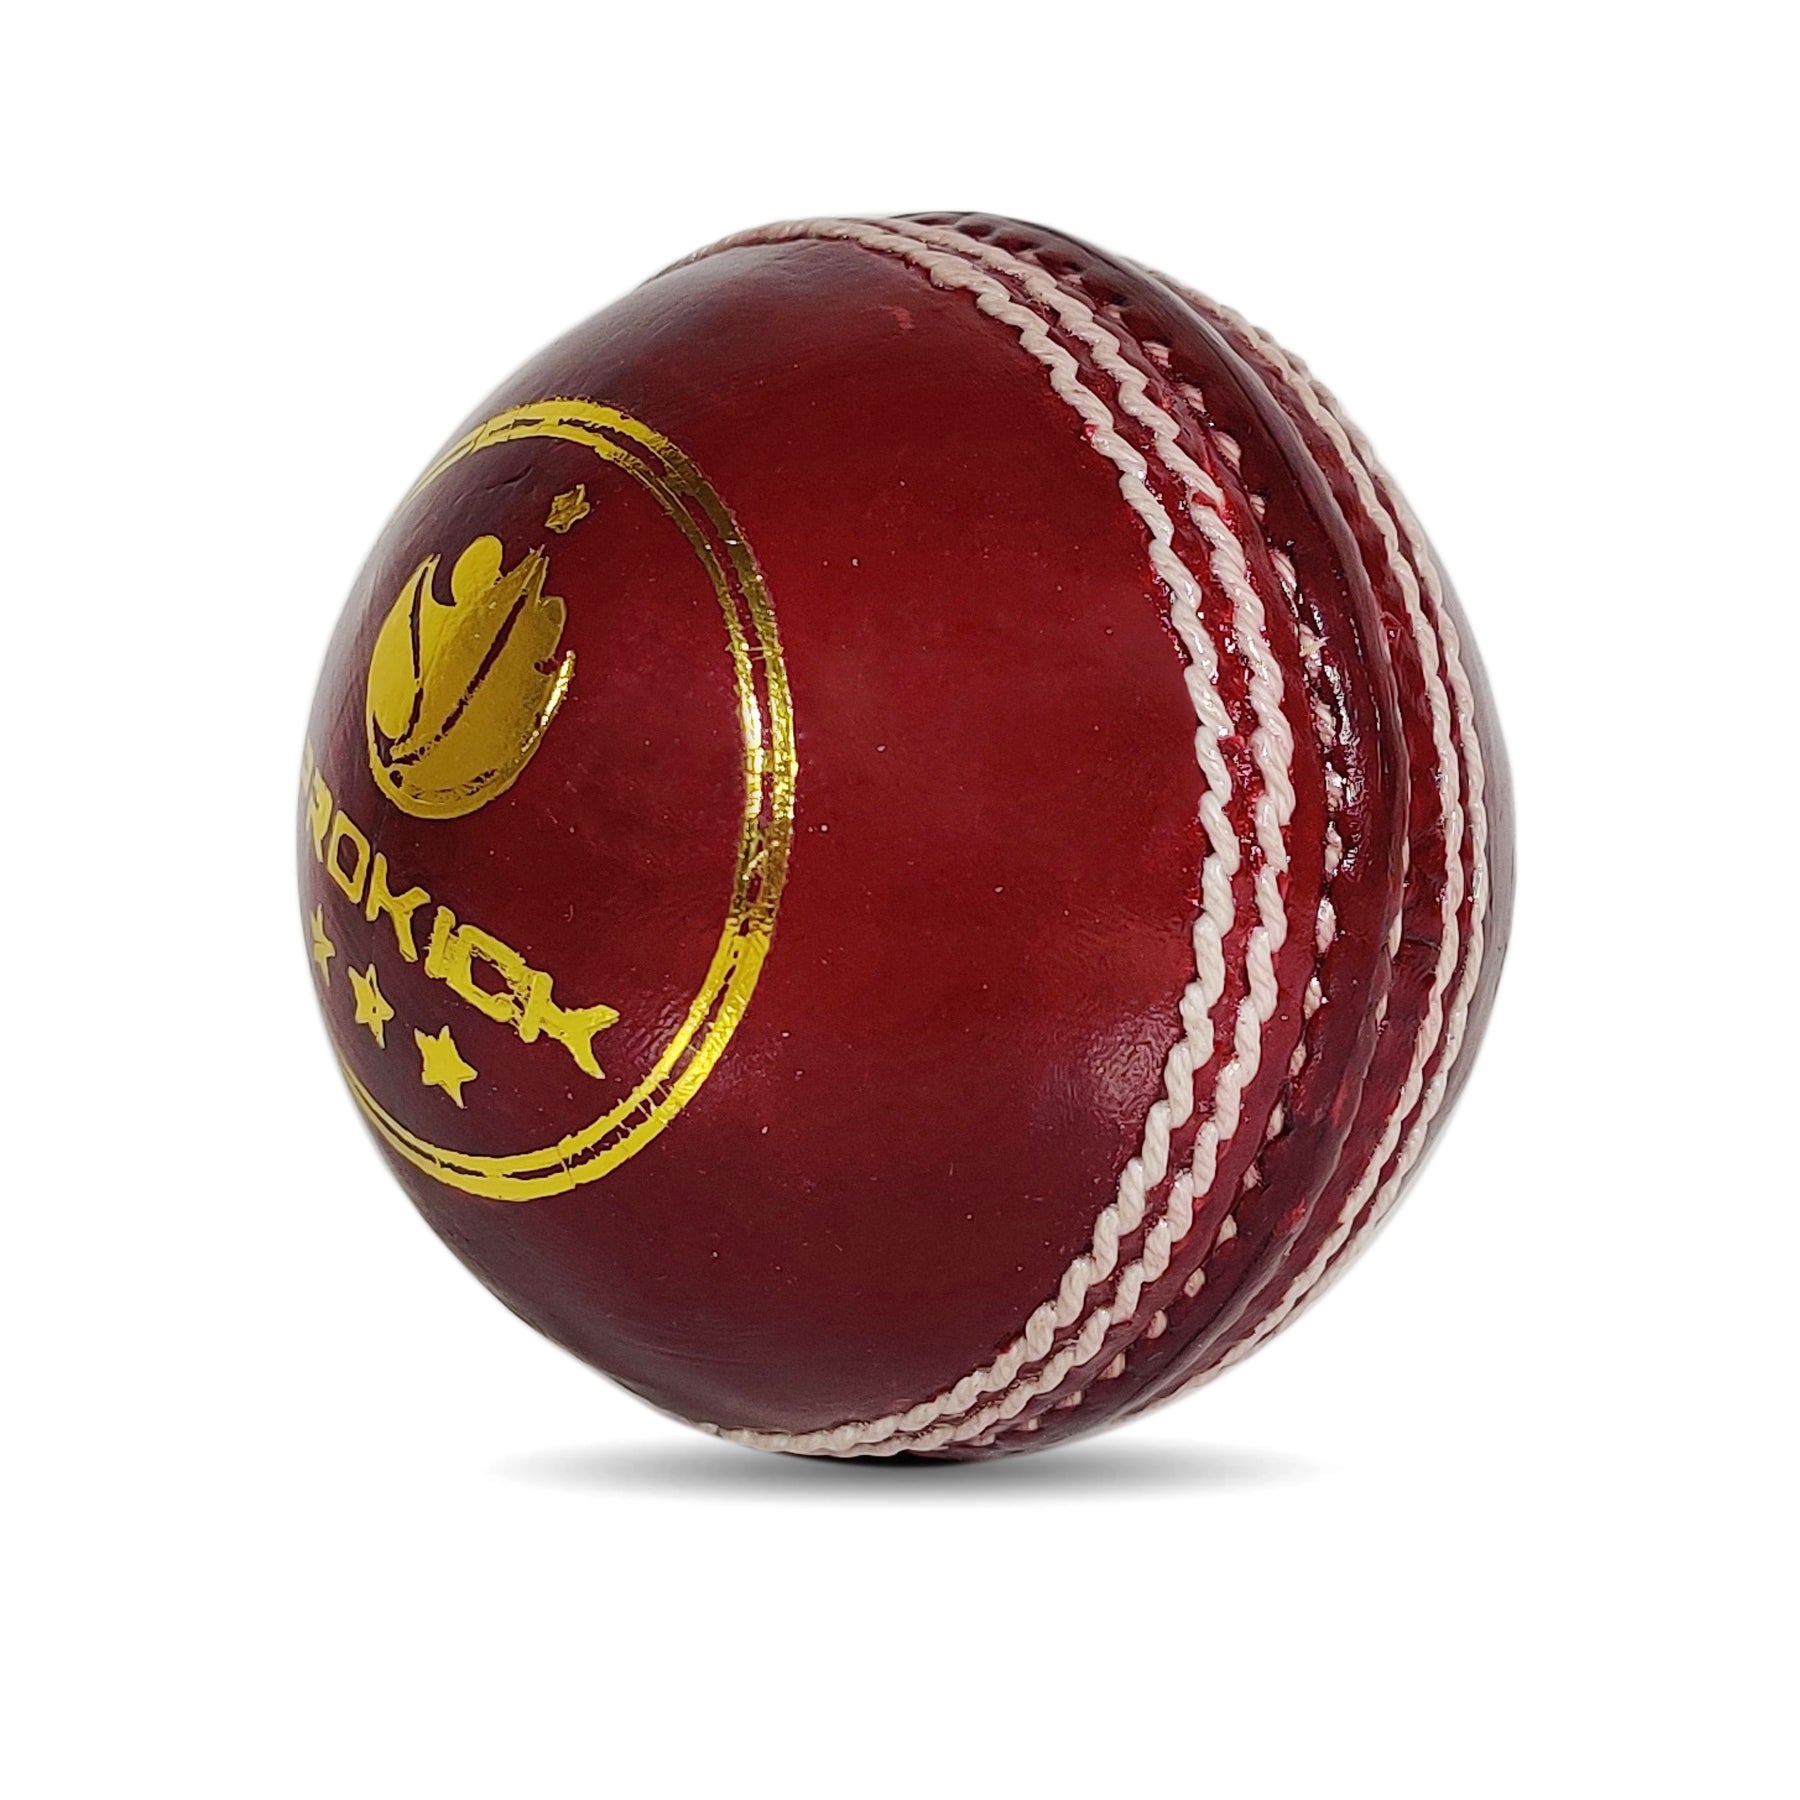 Prokick Tournament Four Piece Leather Cricket Ball, 12 Pc (Red) - Best Price online Prokicksports.com